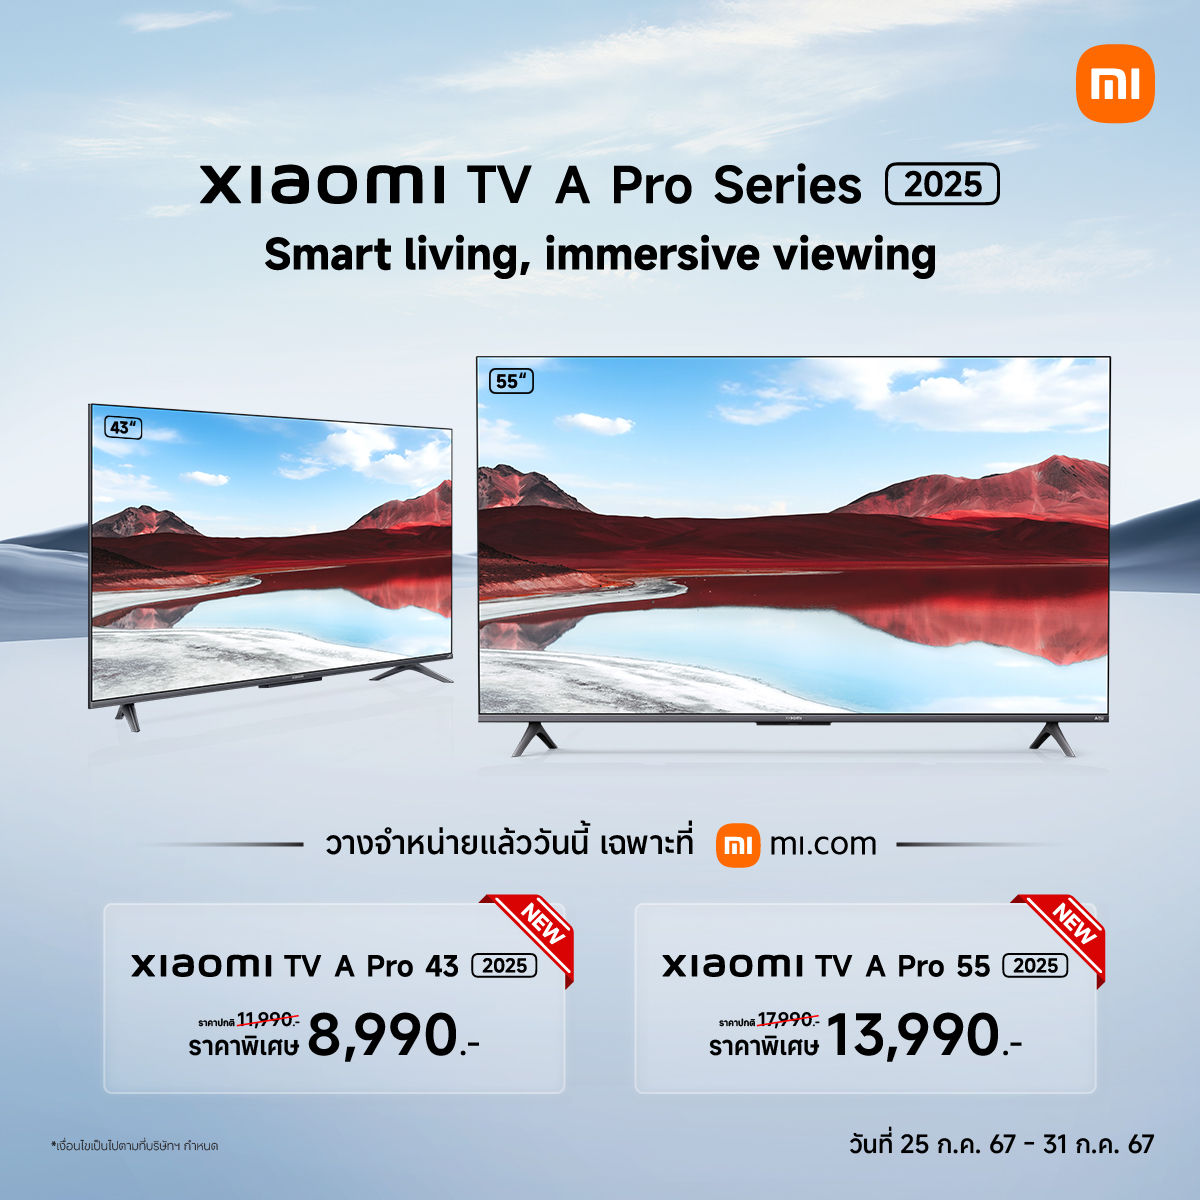 Xiaomi TV A Pro Series 2025 Sales Information